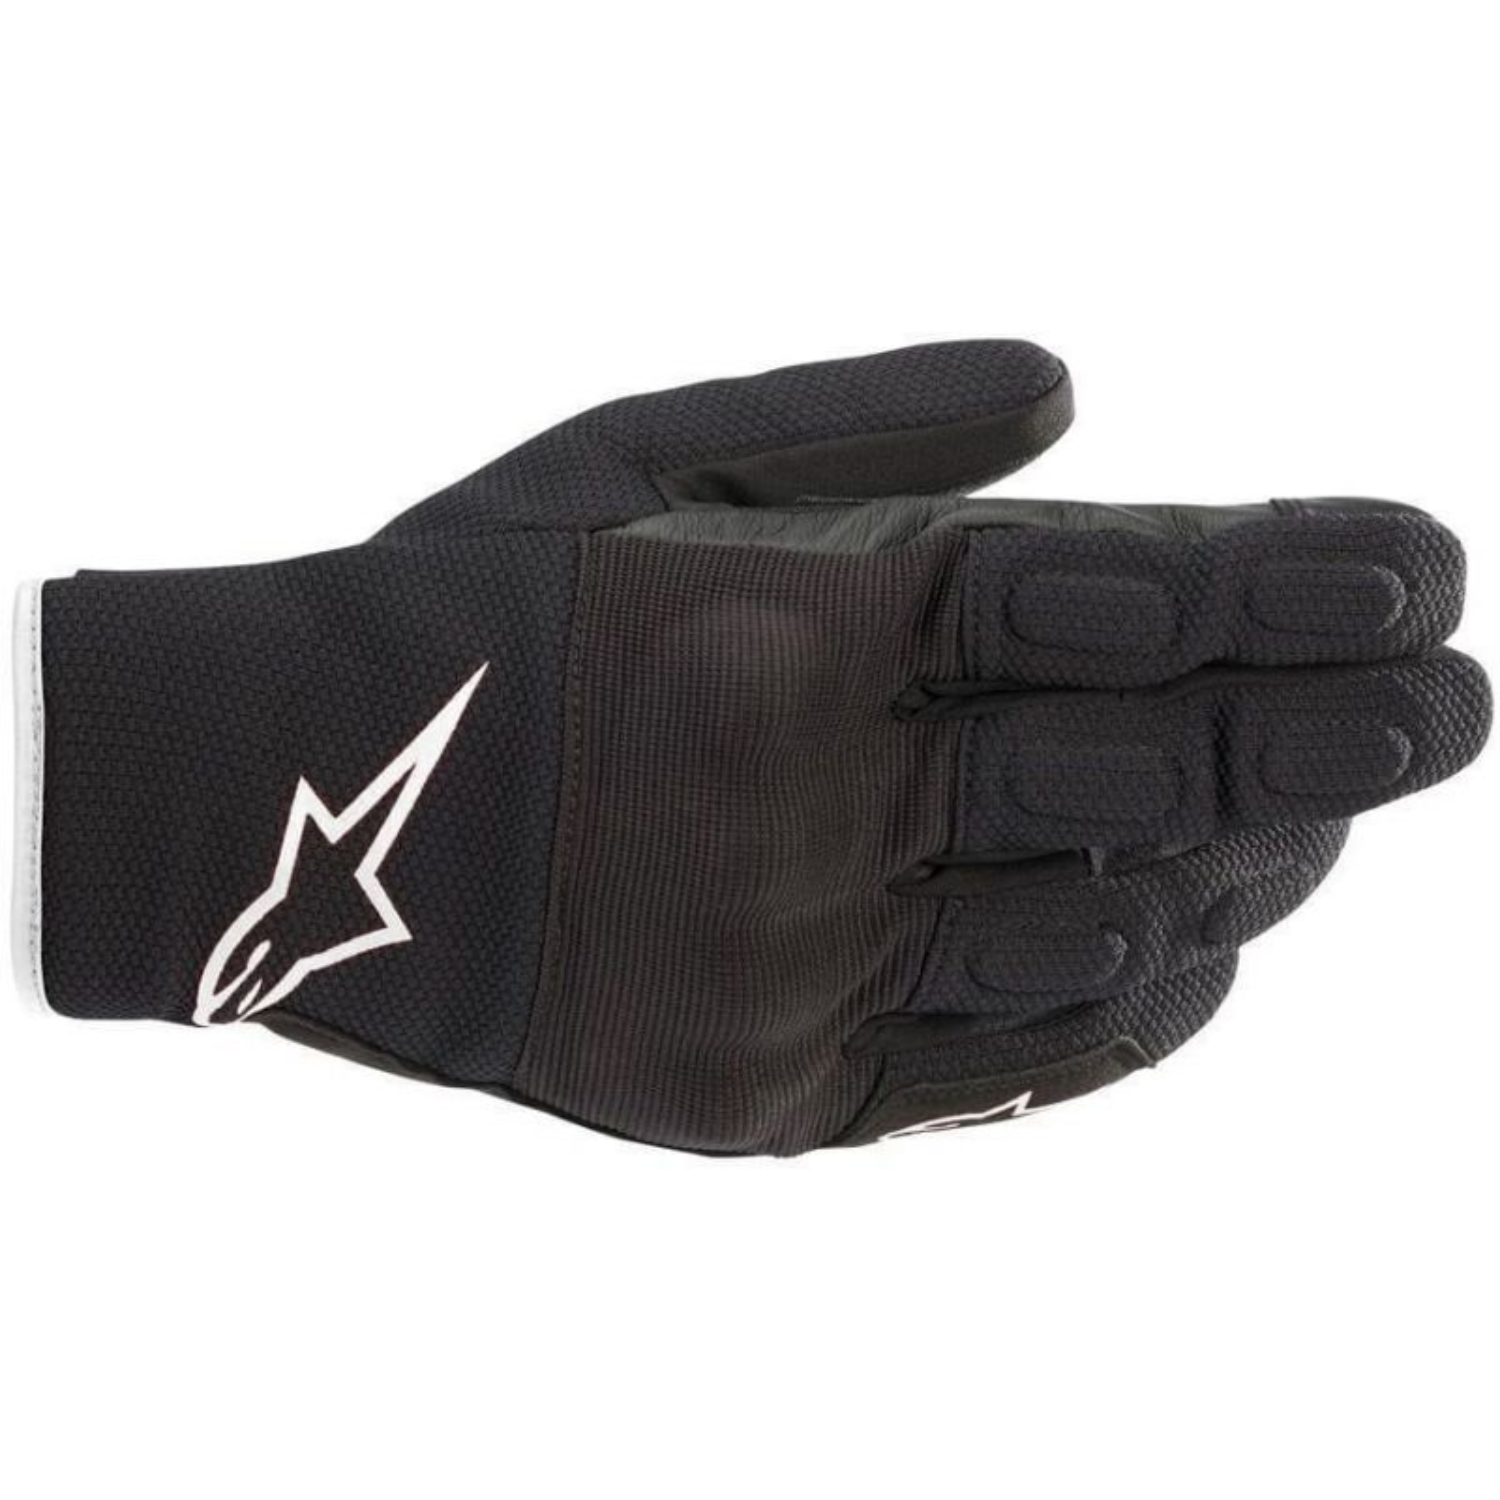 Image of Alpinestars S Max Drystar Gloves Black White Size M EN